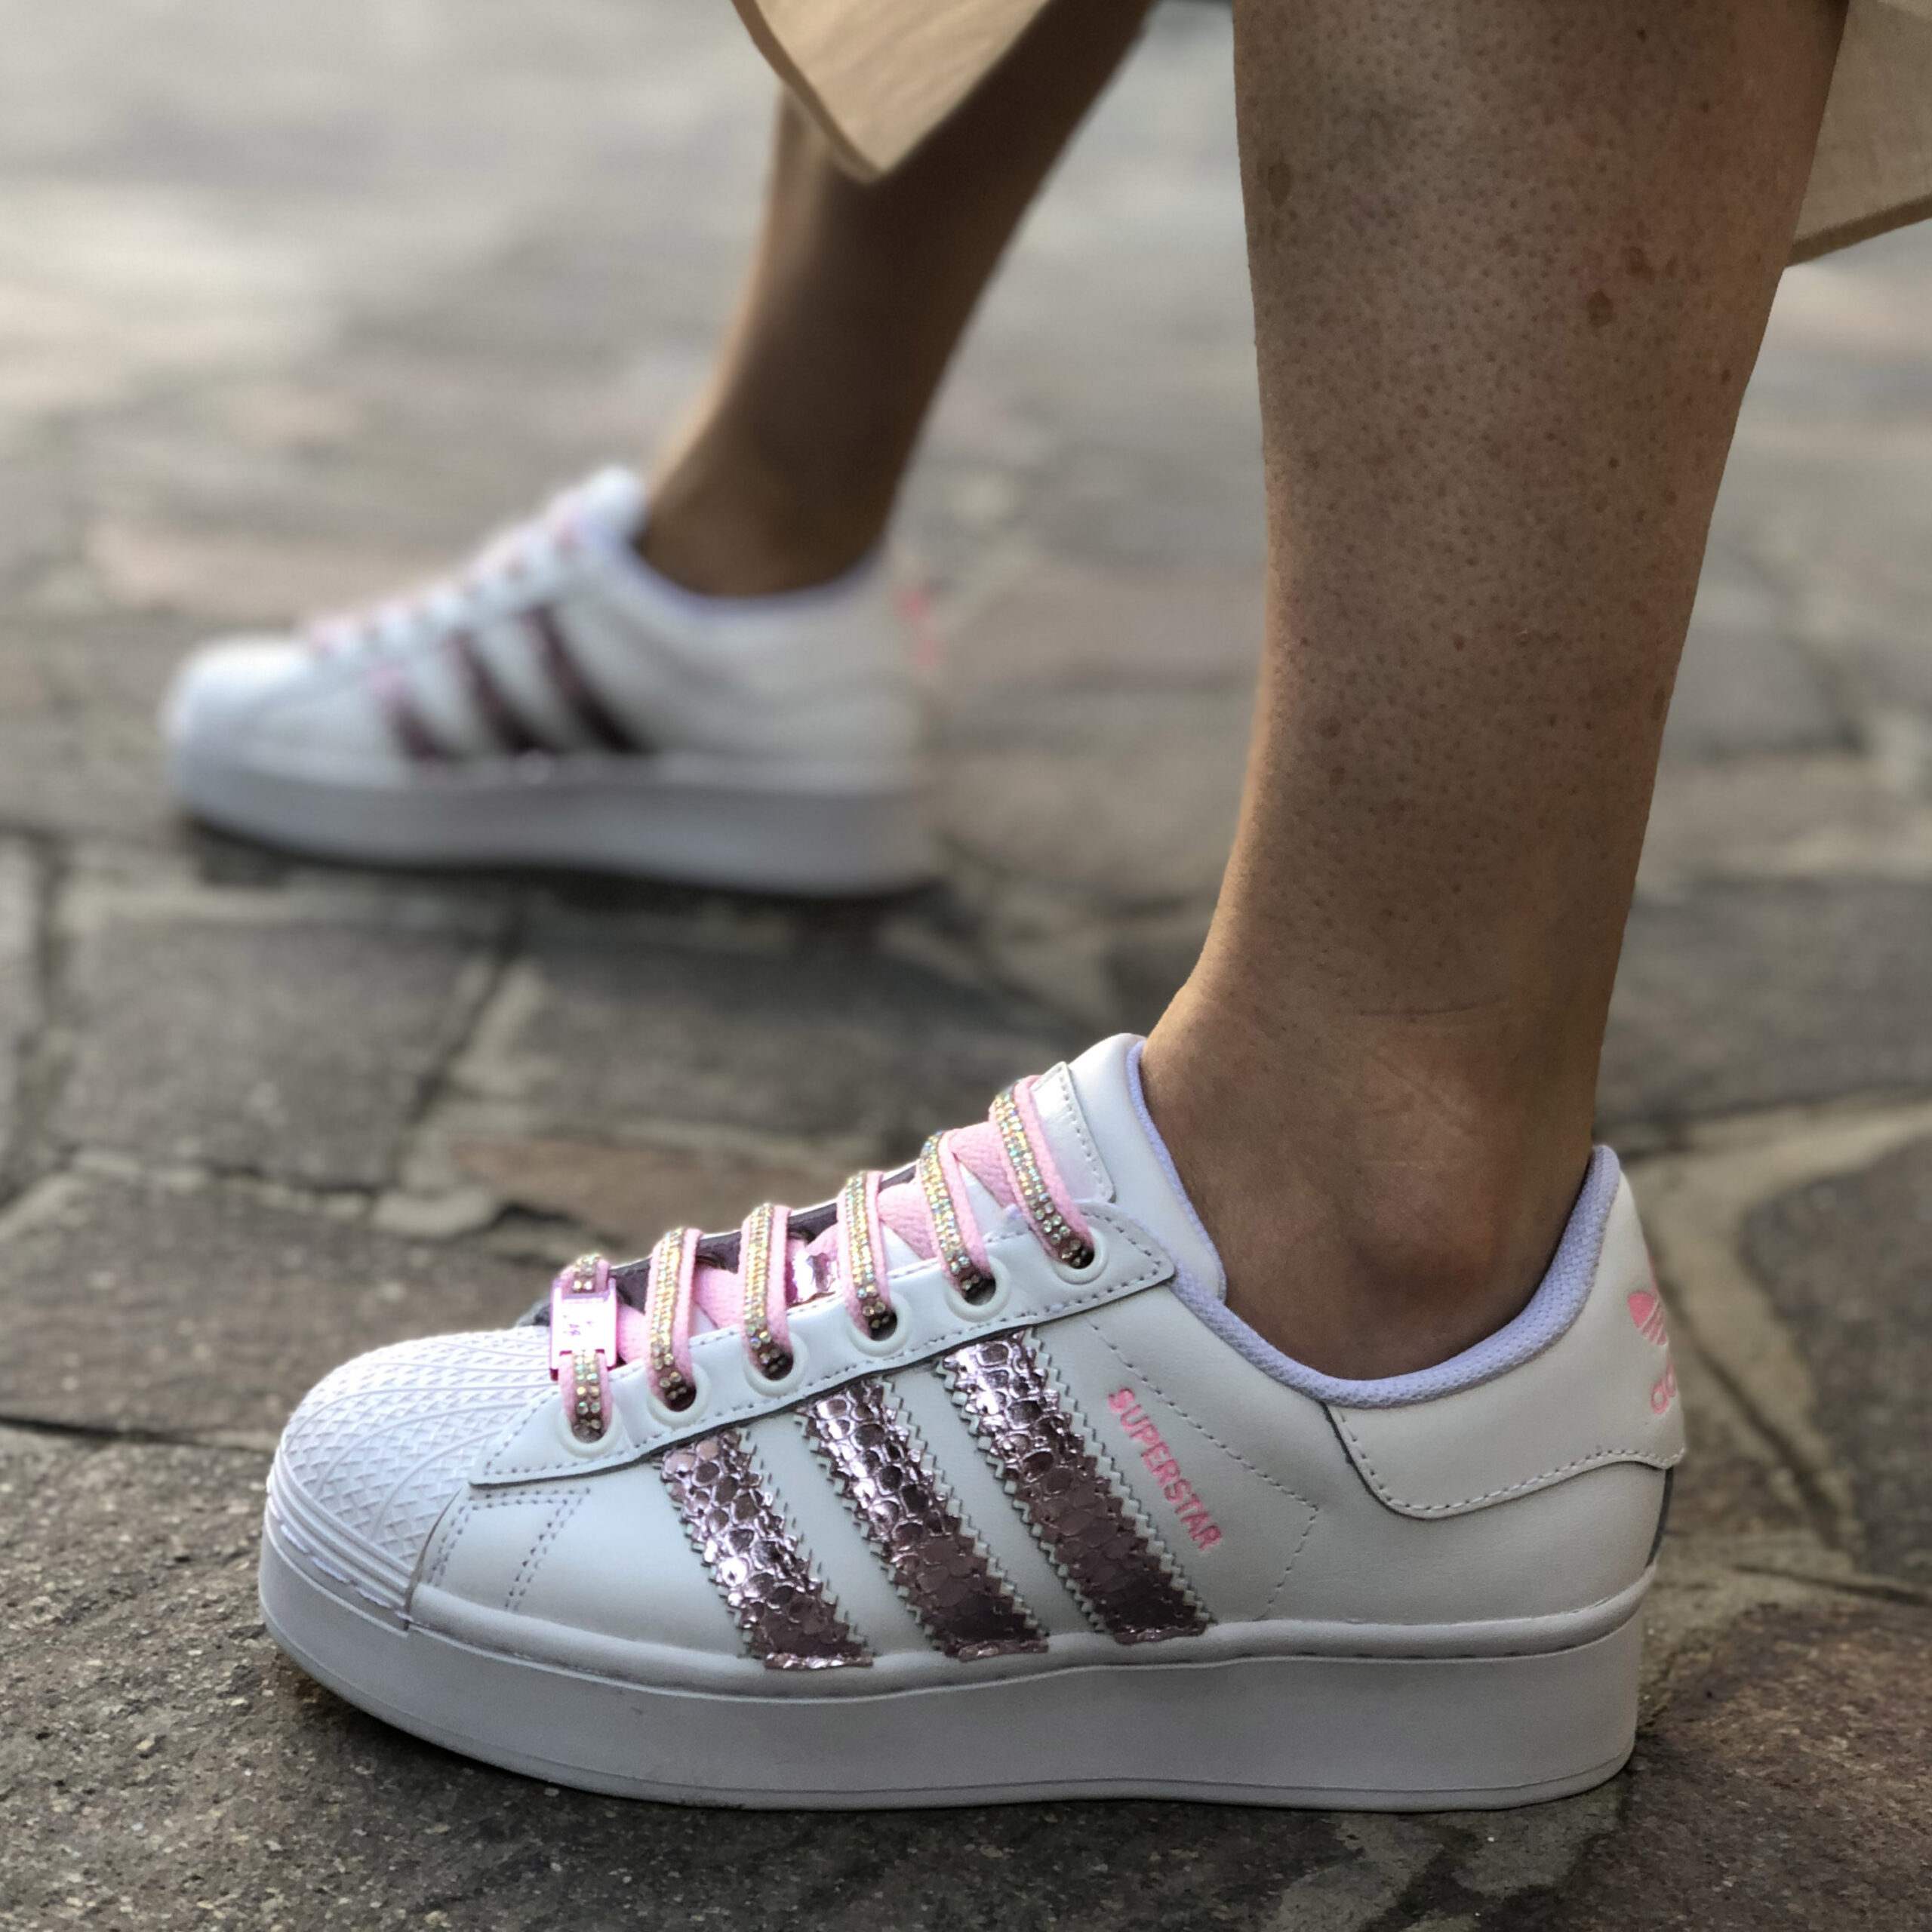 Adidas Superstar Bold Personalizzate Rosa e Strass | LLab scarpe custom